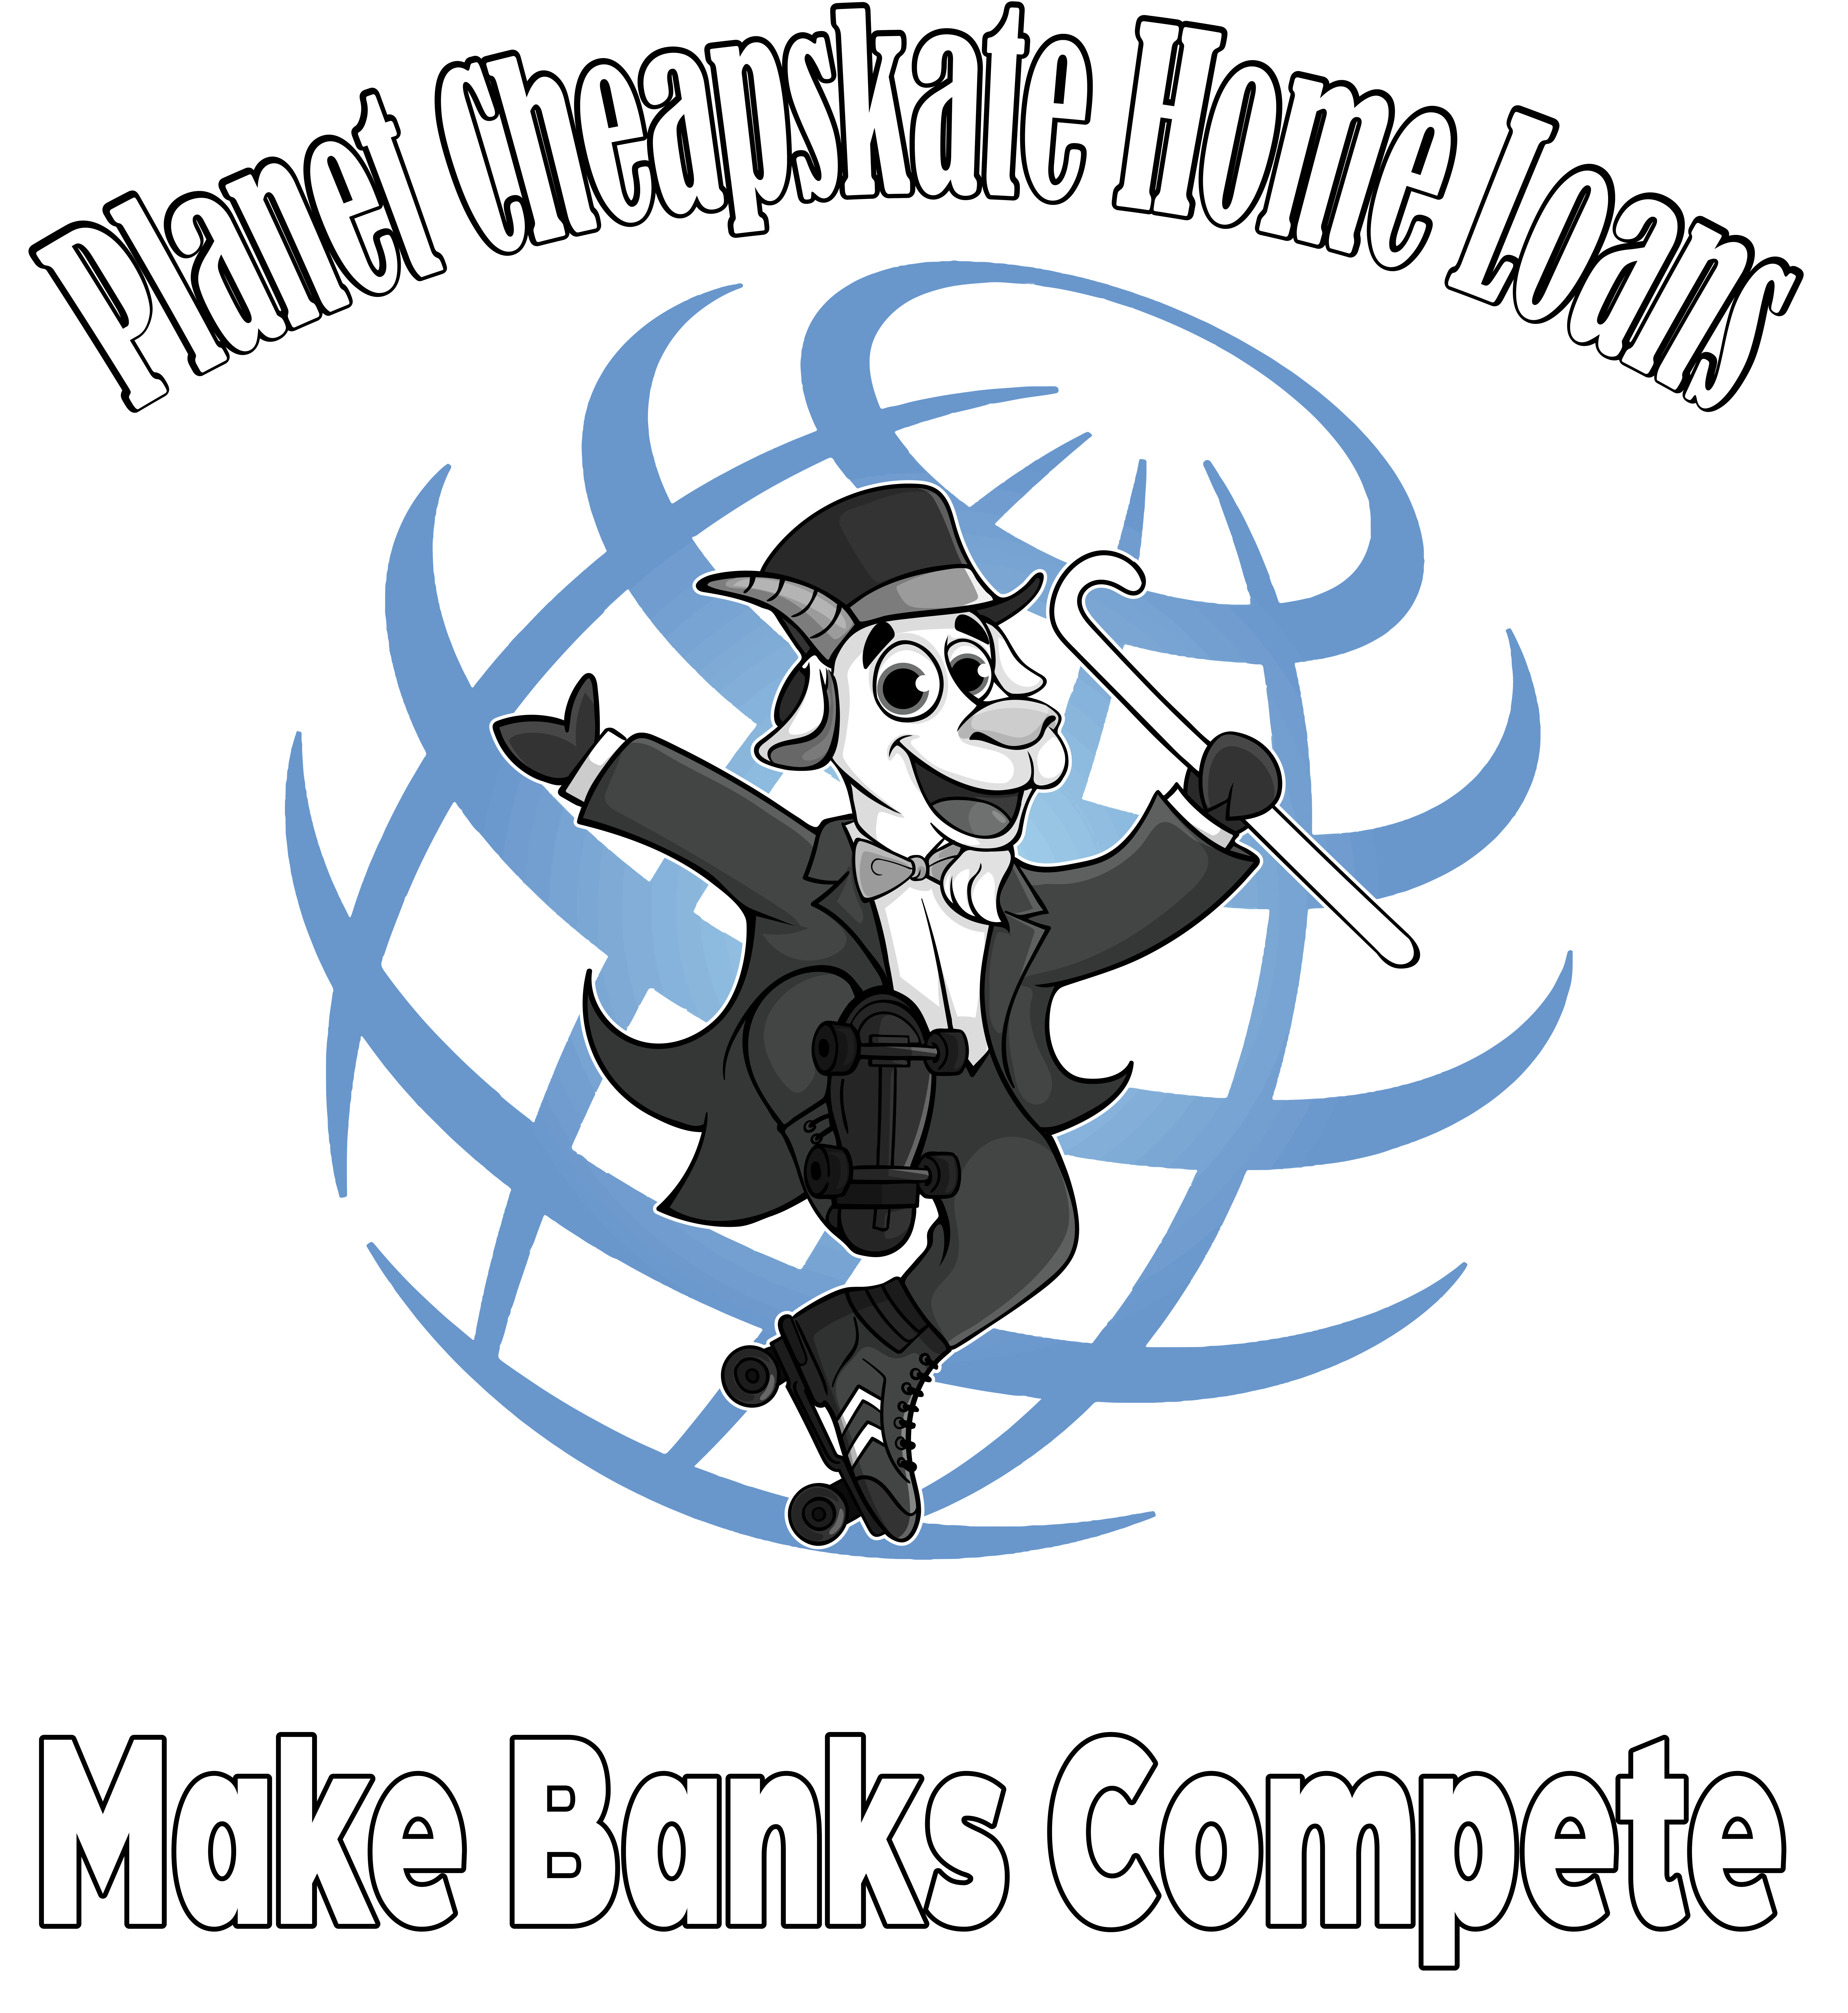 Planet Cheapskate Home Loans Logo